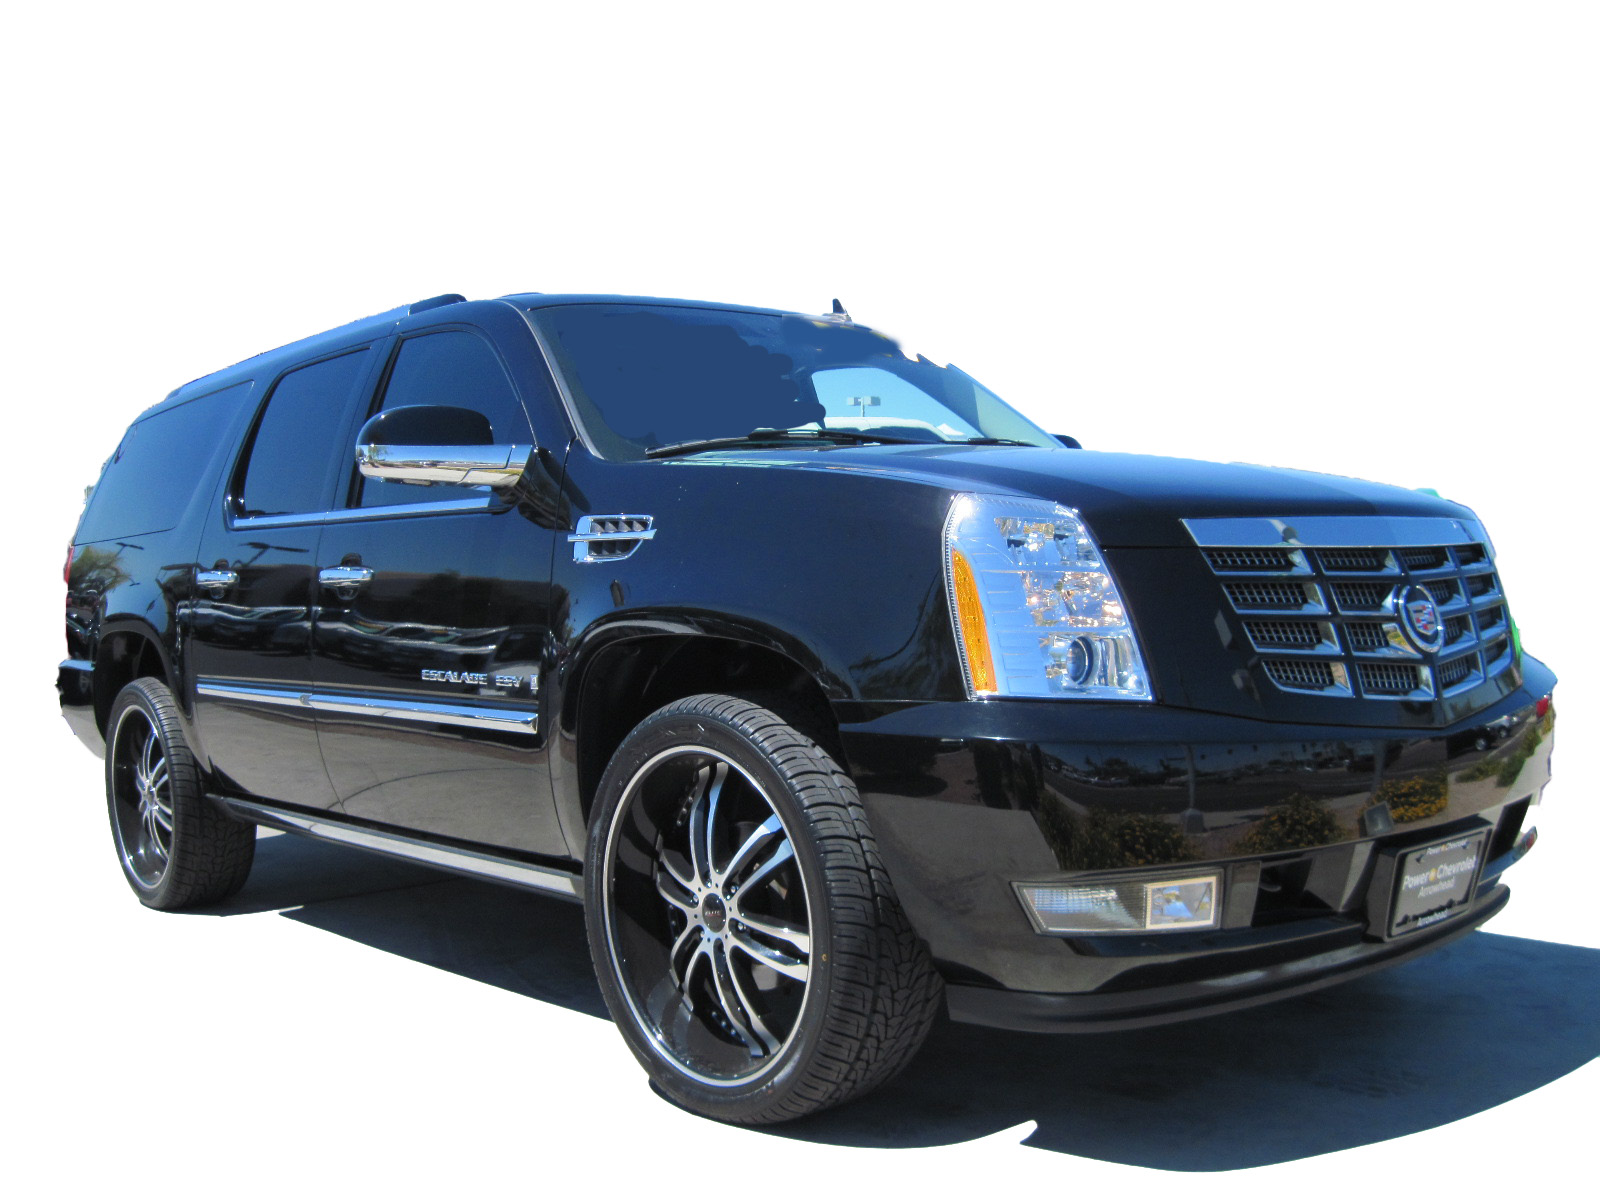 Luxury Cars in Arizona: 2007 Cadillac Escalade ESV